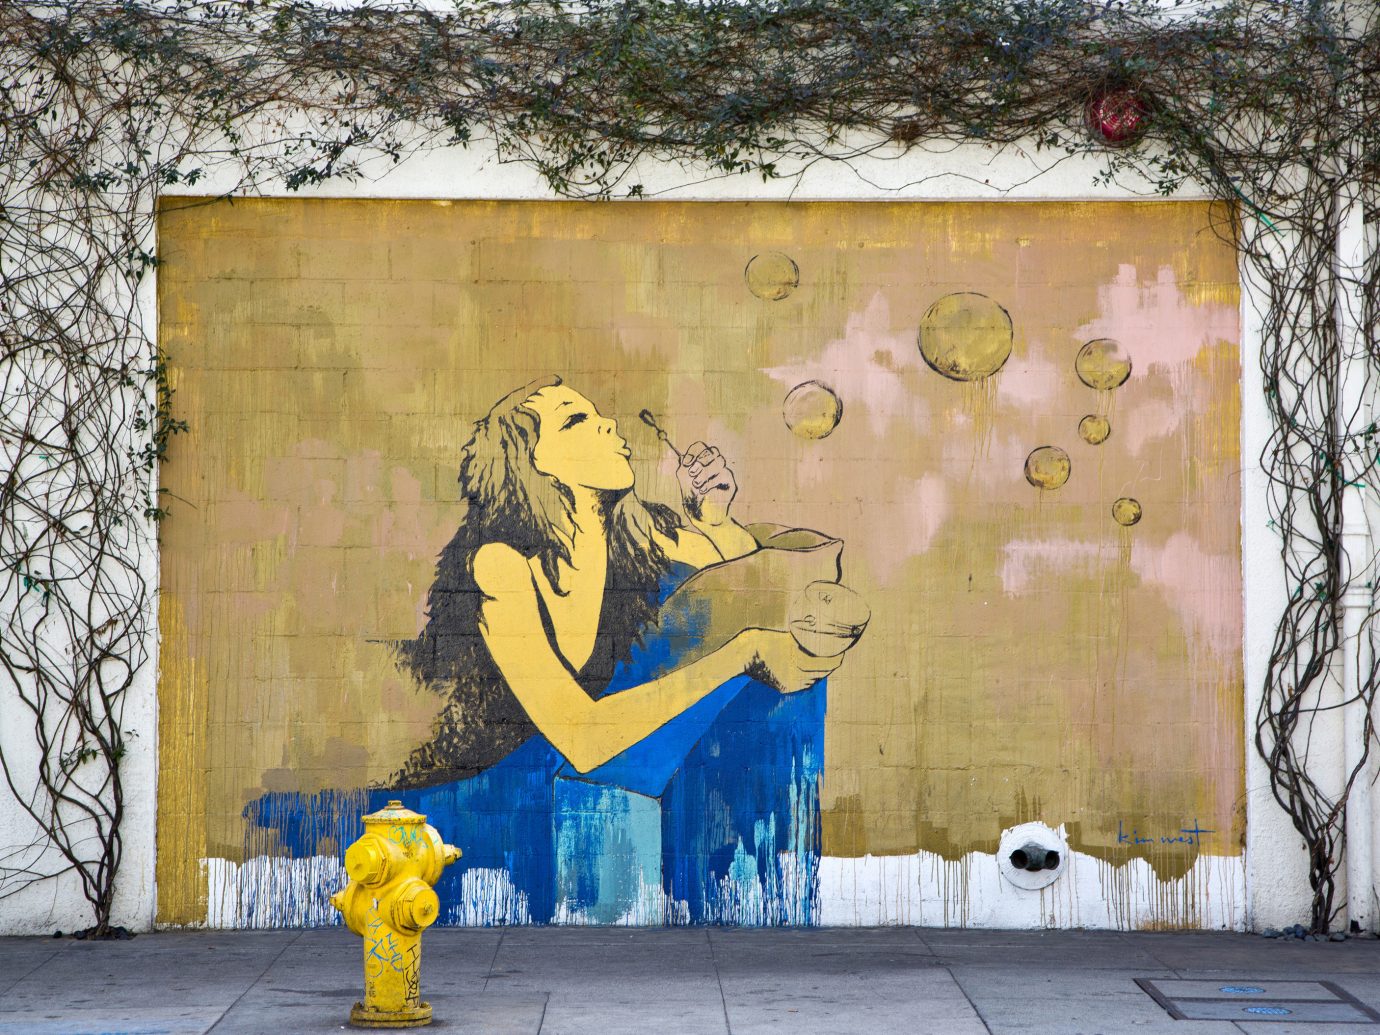 Trip Ideas tree outdoor color yellow hydrant mural wall urban area art graffiti street art road street painting painted